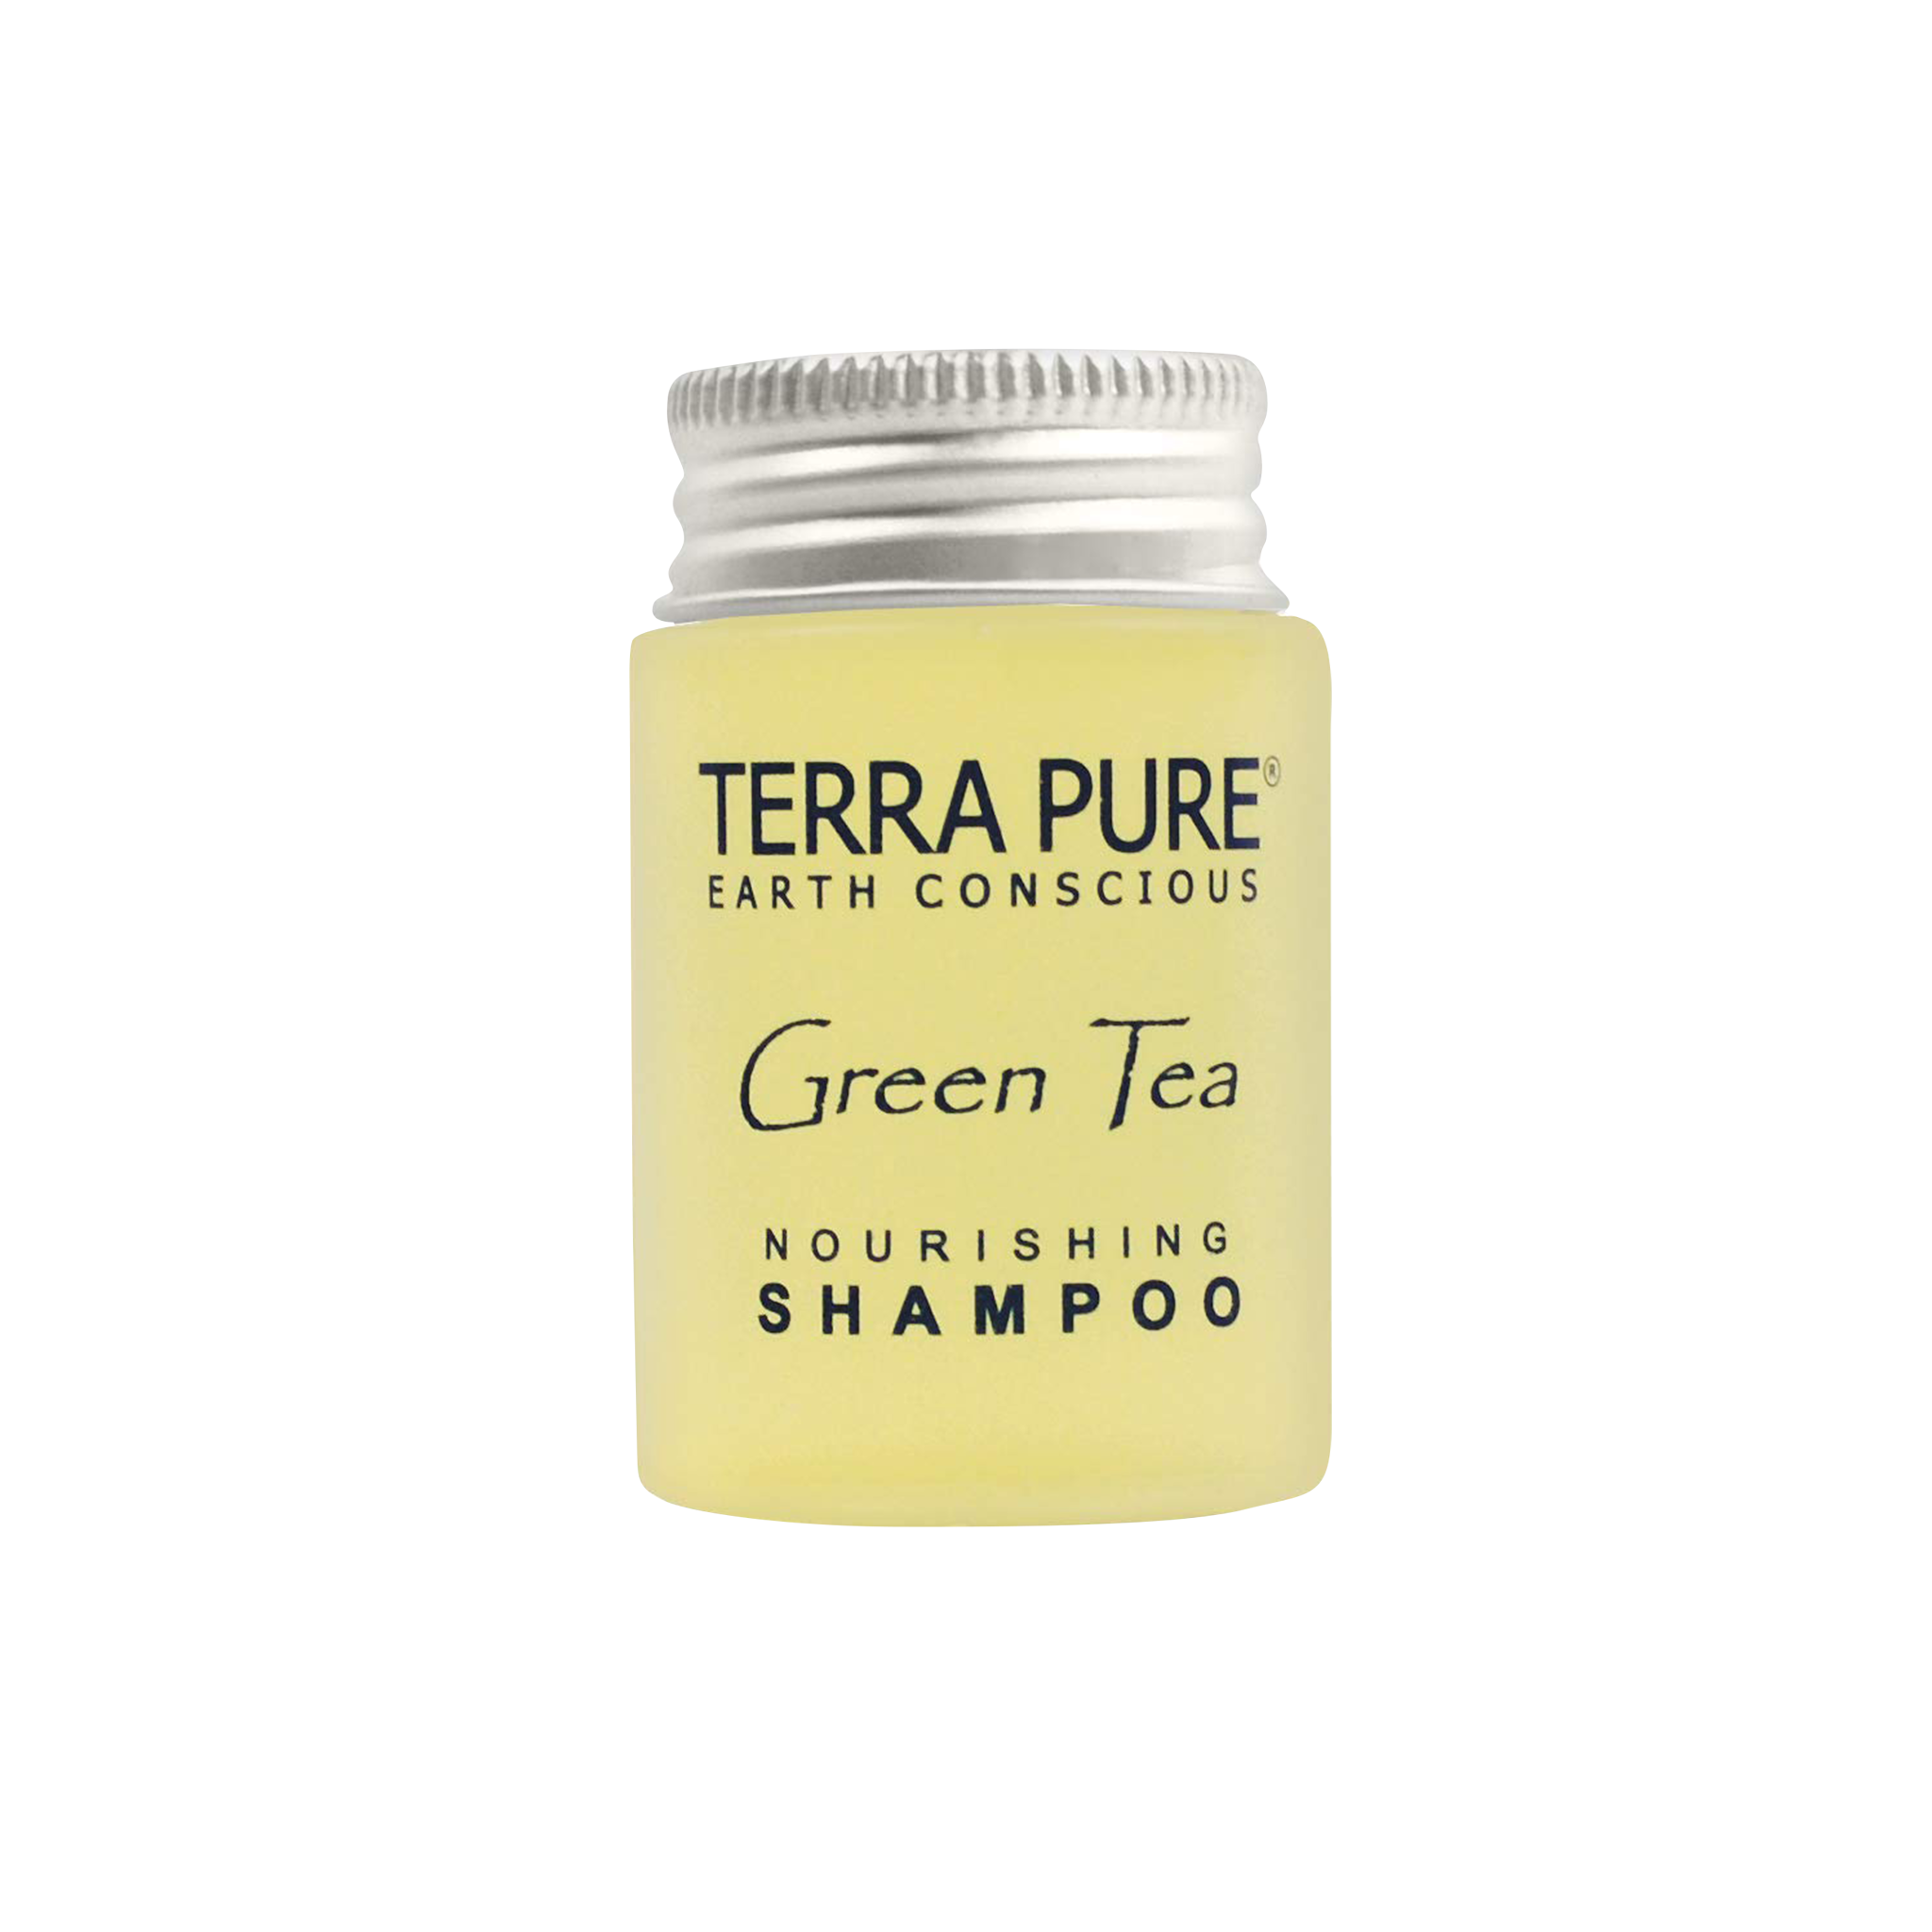 Terra Pure Shampoo - 1 Oz - Case Of 300